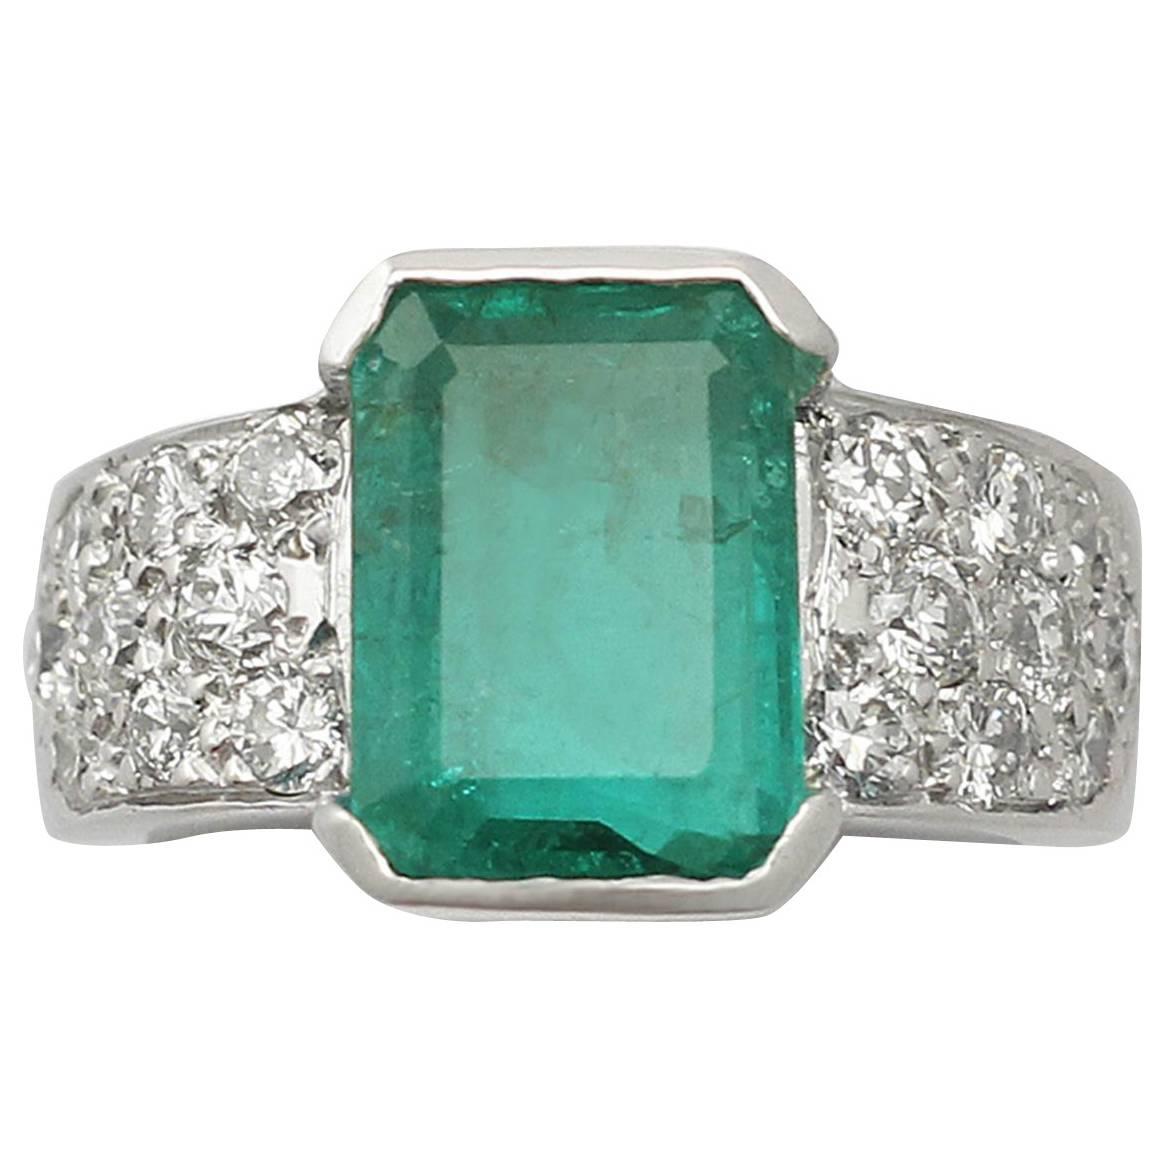 1.05Ct Emerald & 1.05Ct Diamond, 18k White Gold Dress Ring - Vintage Circa 1950